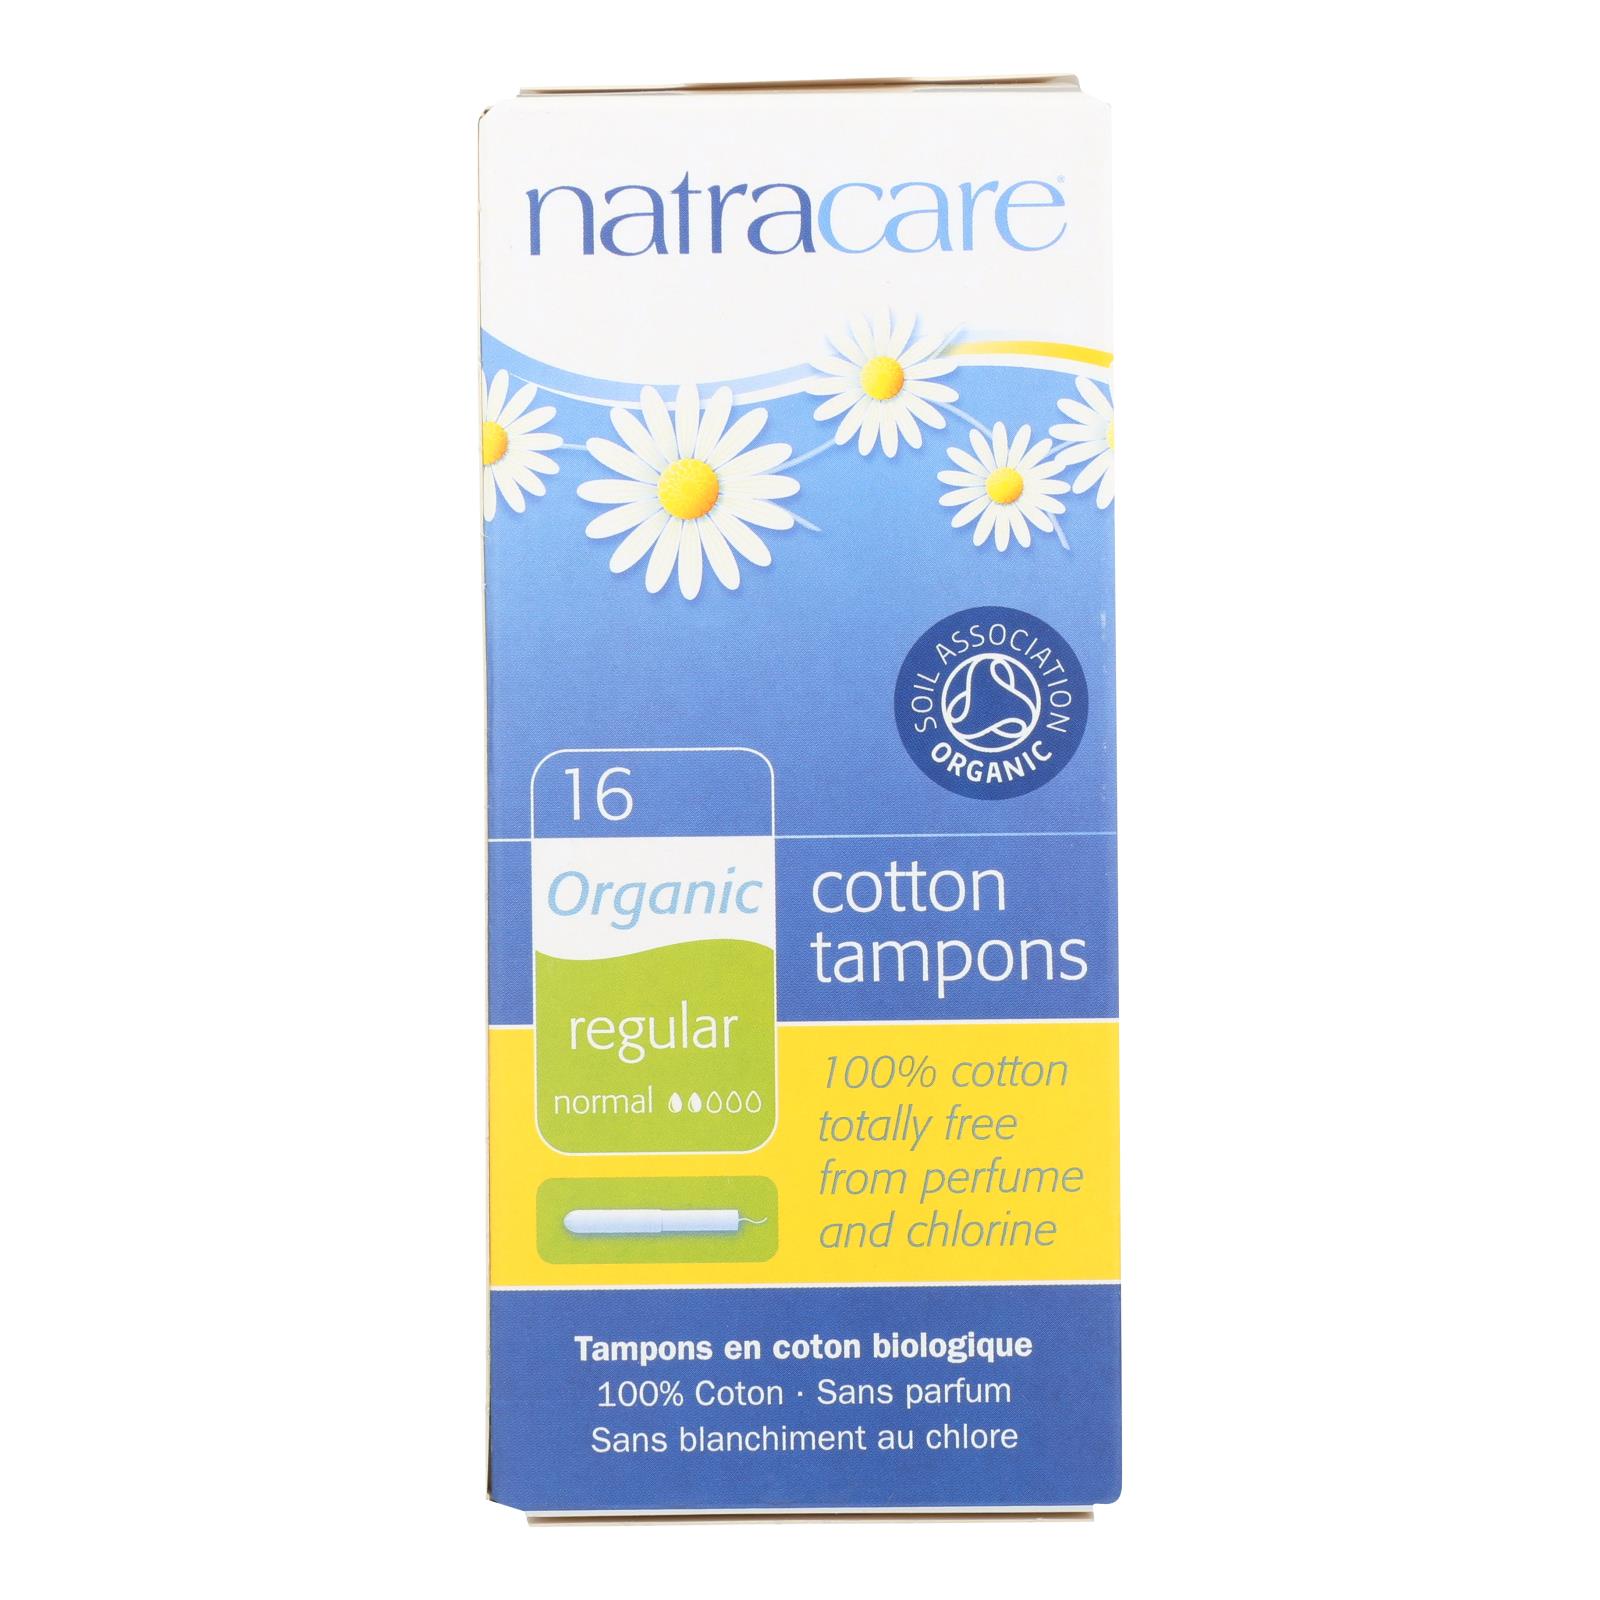 Natracare Regular Organic Cotton Tampons - 12개 묶음상품 - 16 CT